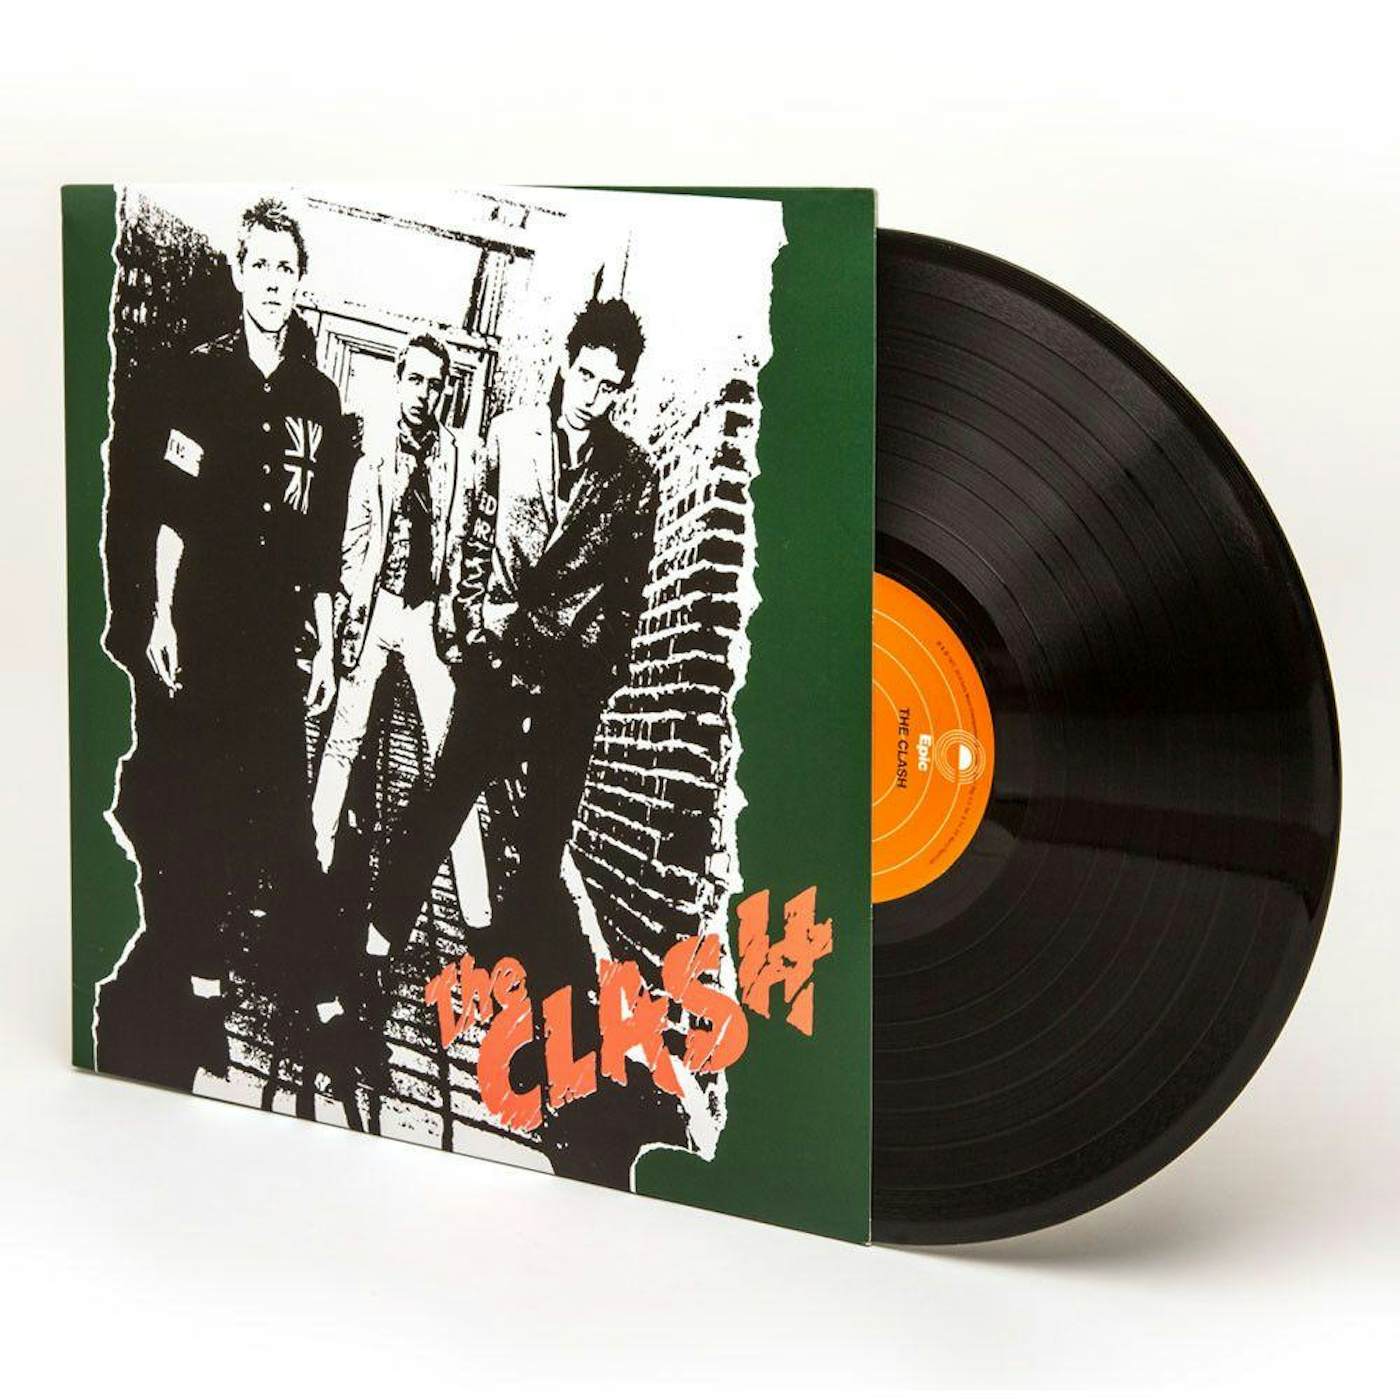 The Clash Vinyl Record